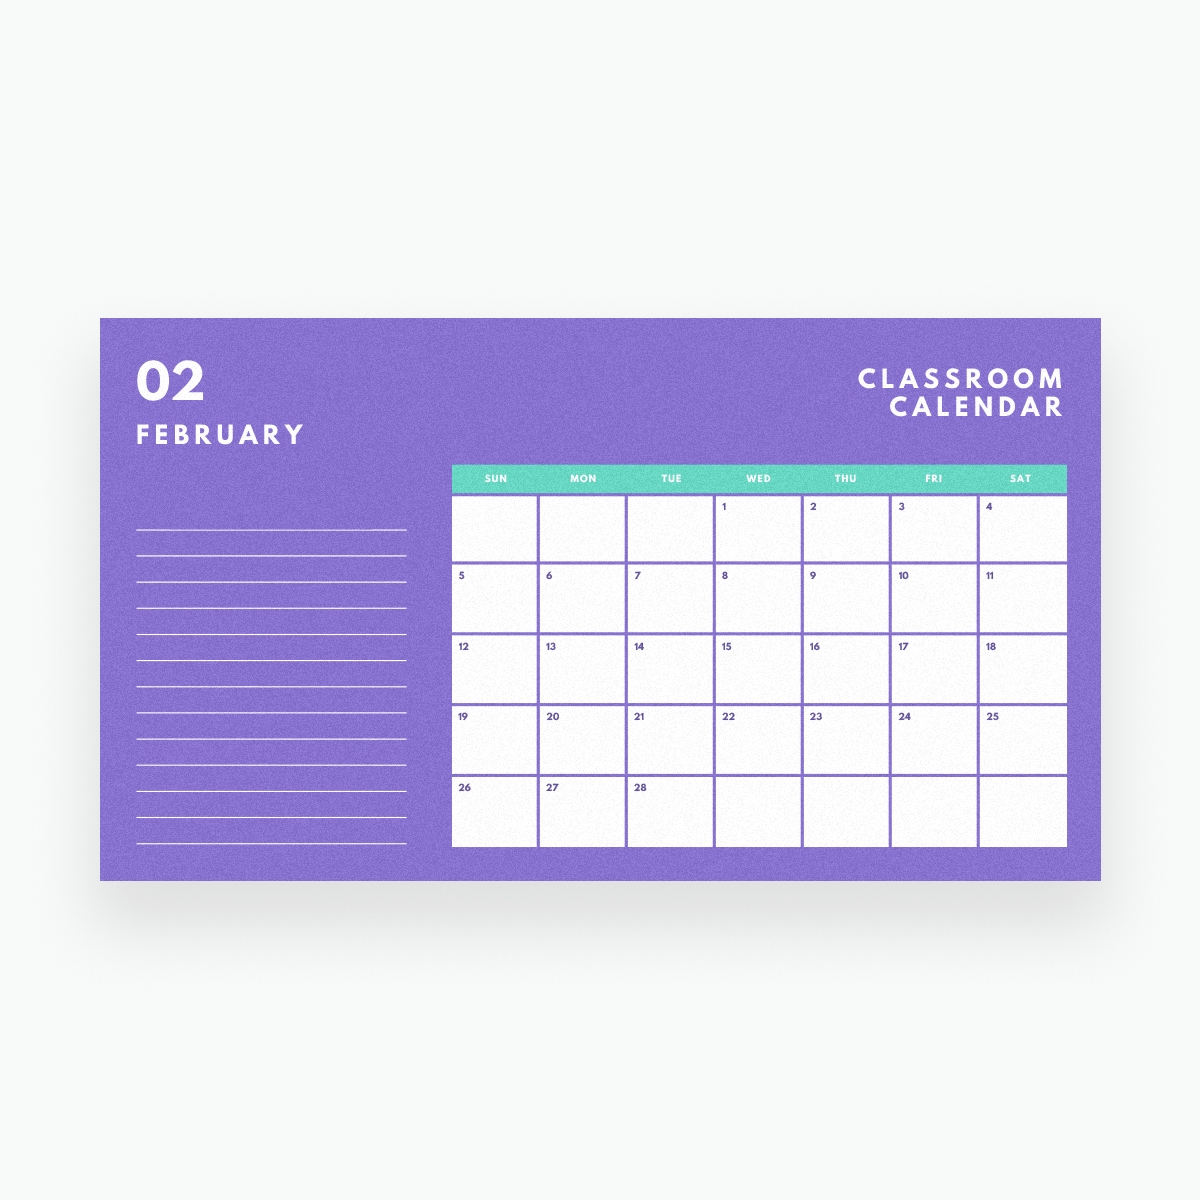 Design Custom Calendar Using Online Calendar Maker - Canva